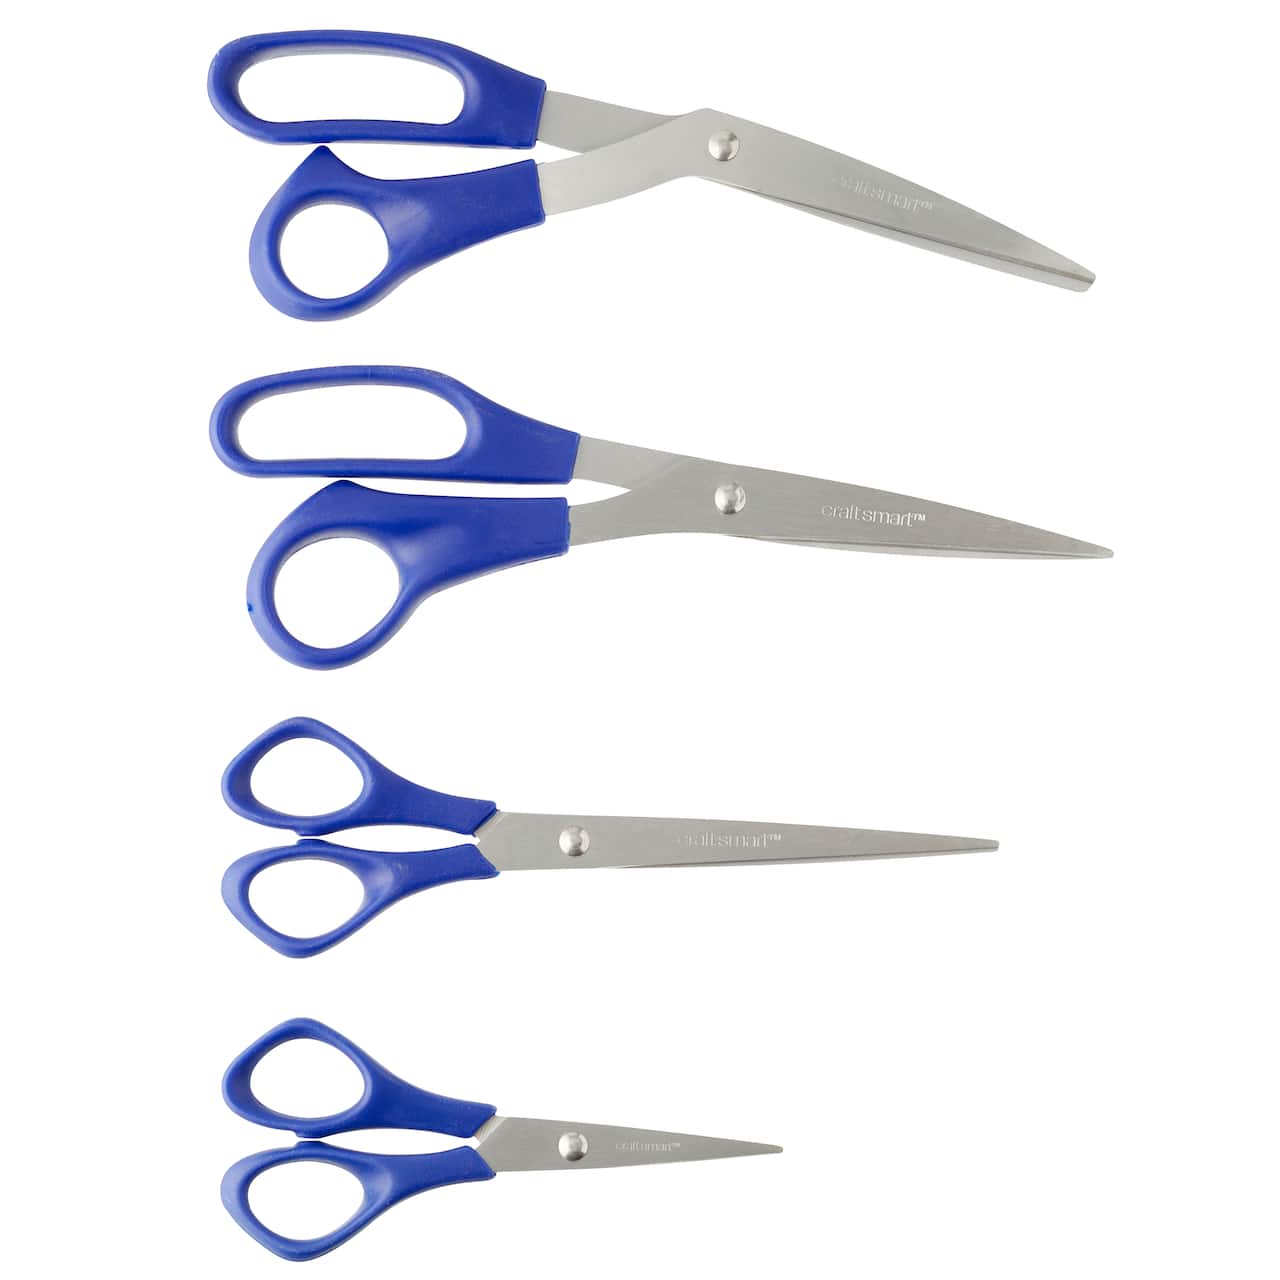 Multi-Purpose Scissors Value Pack by Craft Smart&#x2122;